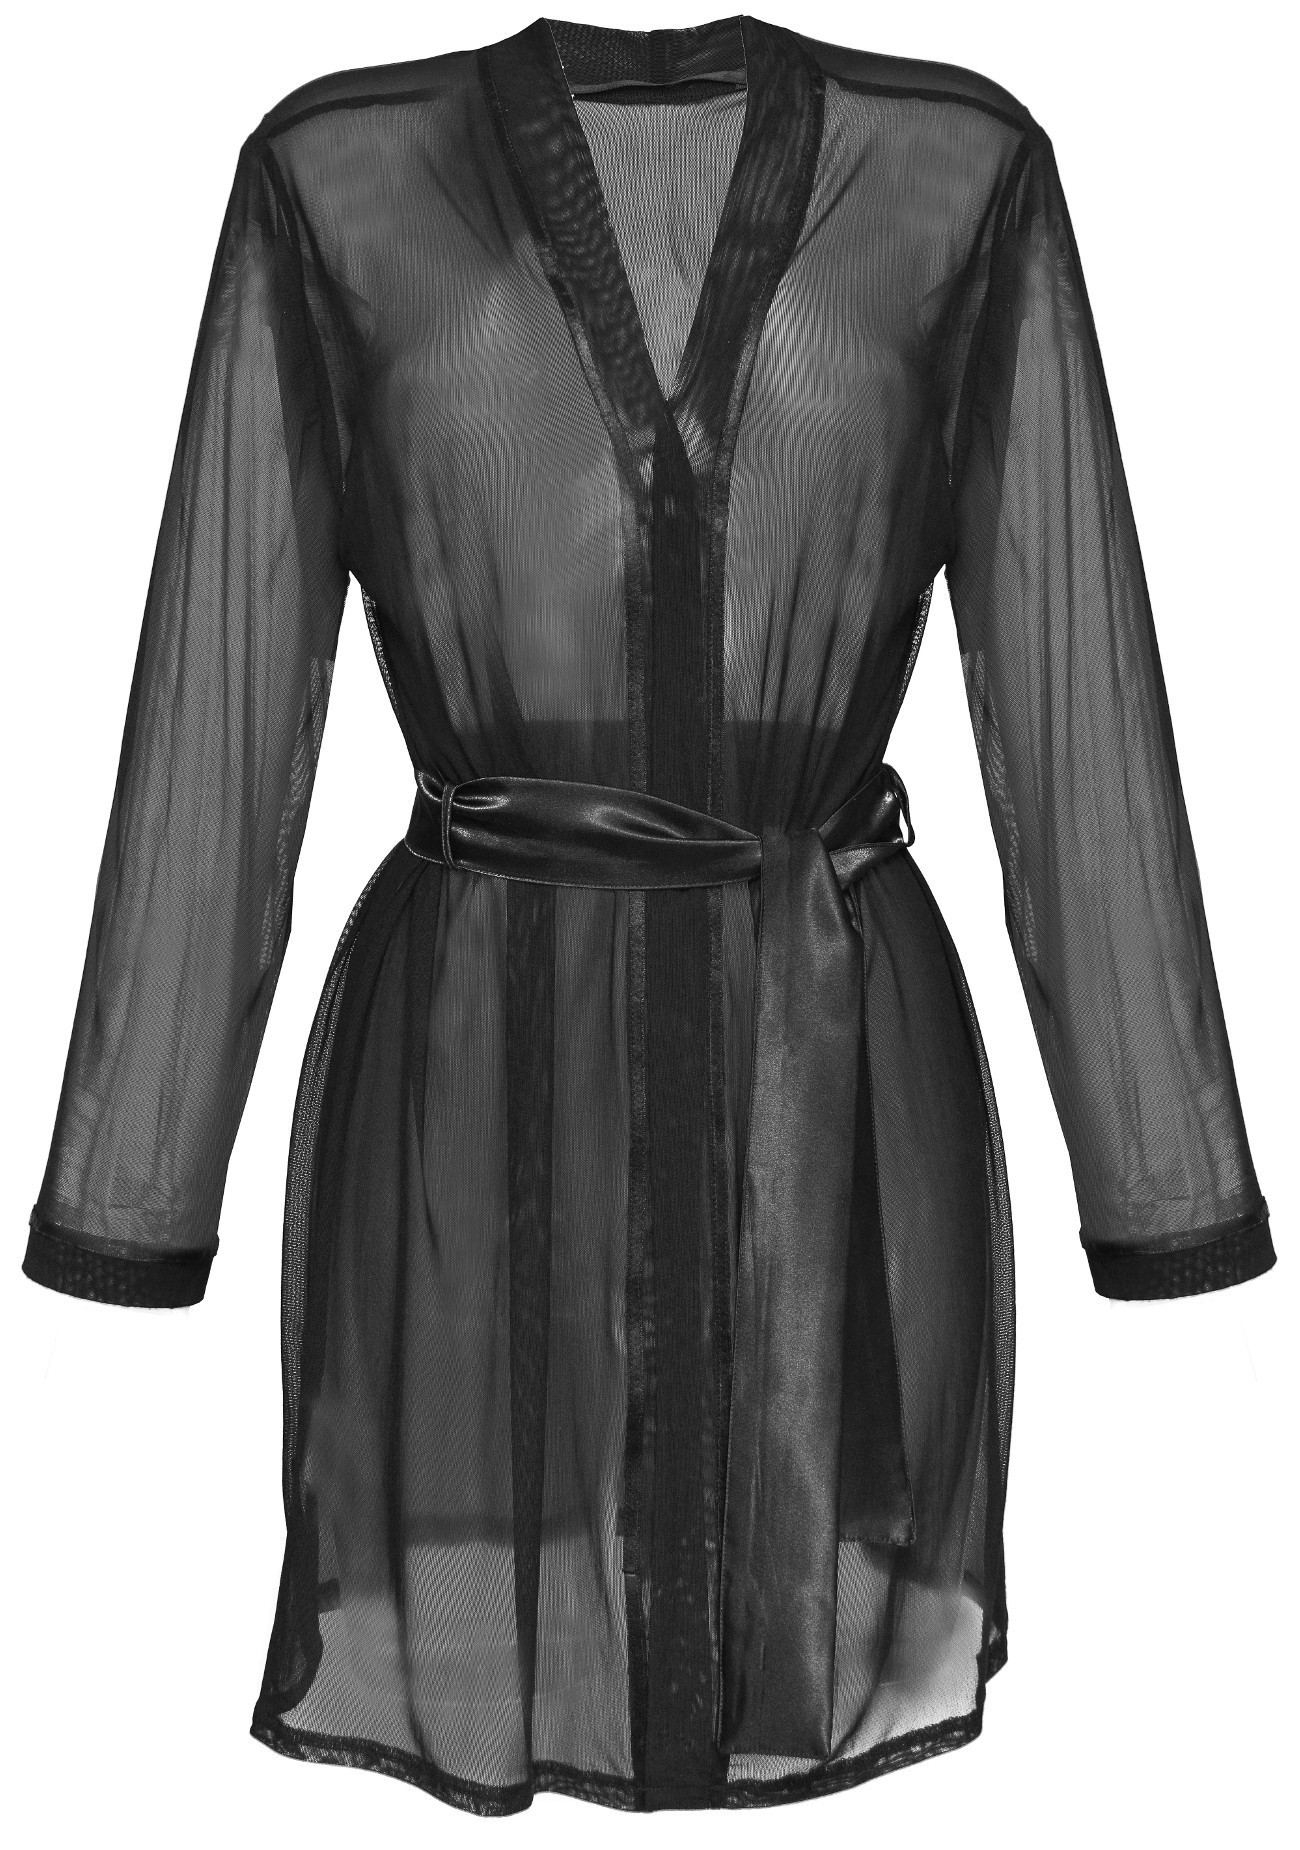 Housecoat model 18226921 Black M Black - DKaren